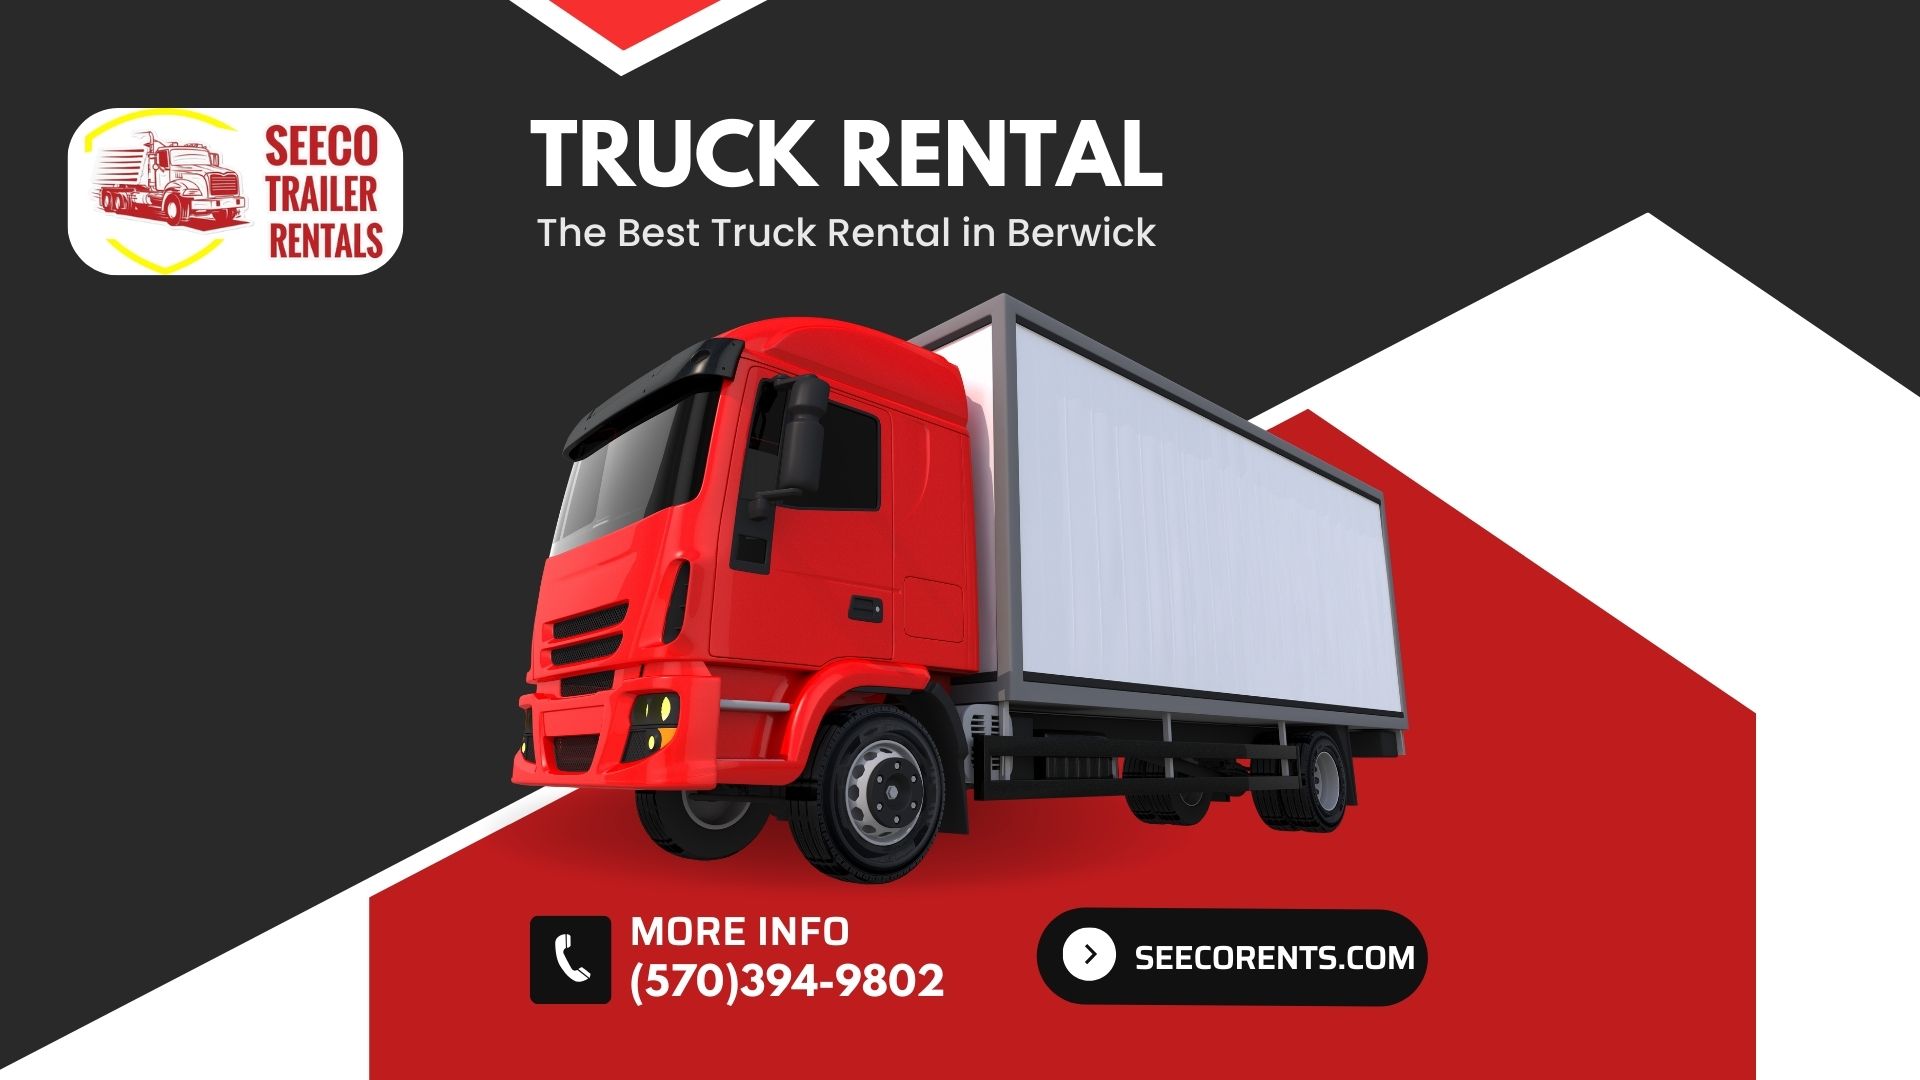 Truck Rental in Berwick, moving truck rental